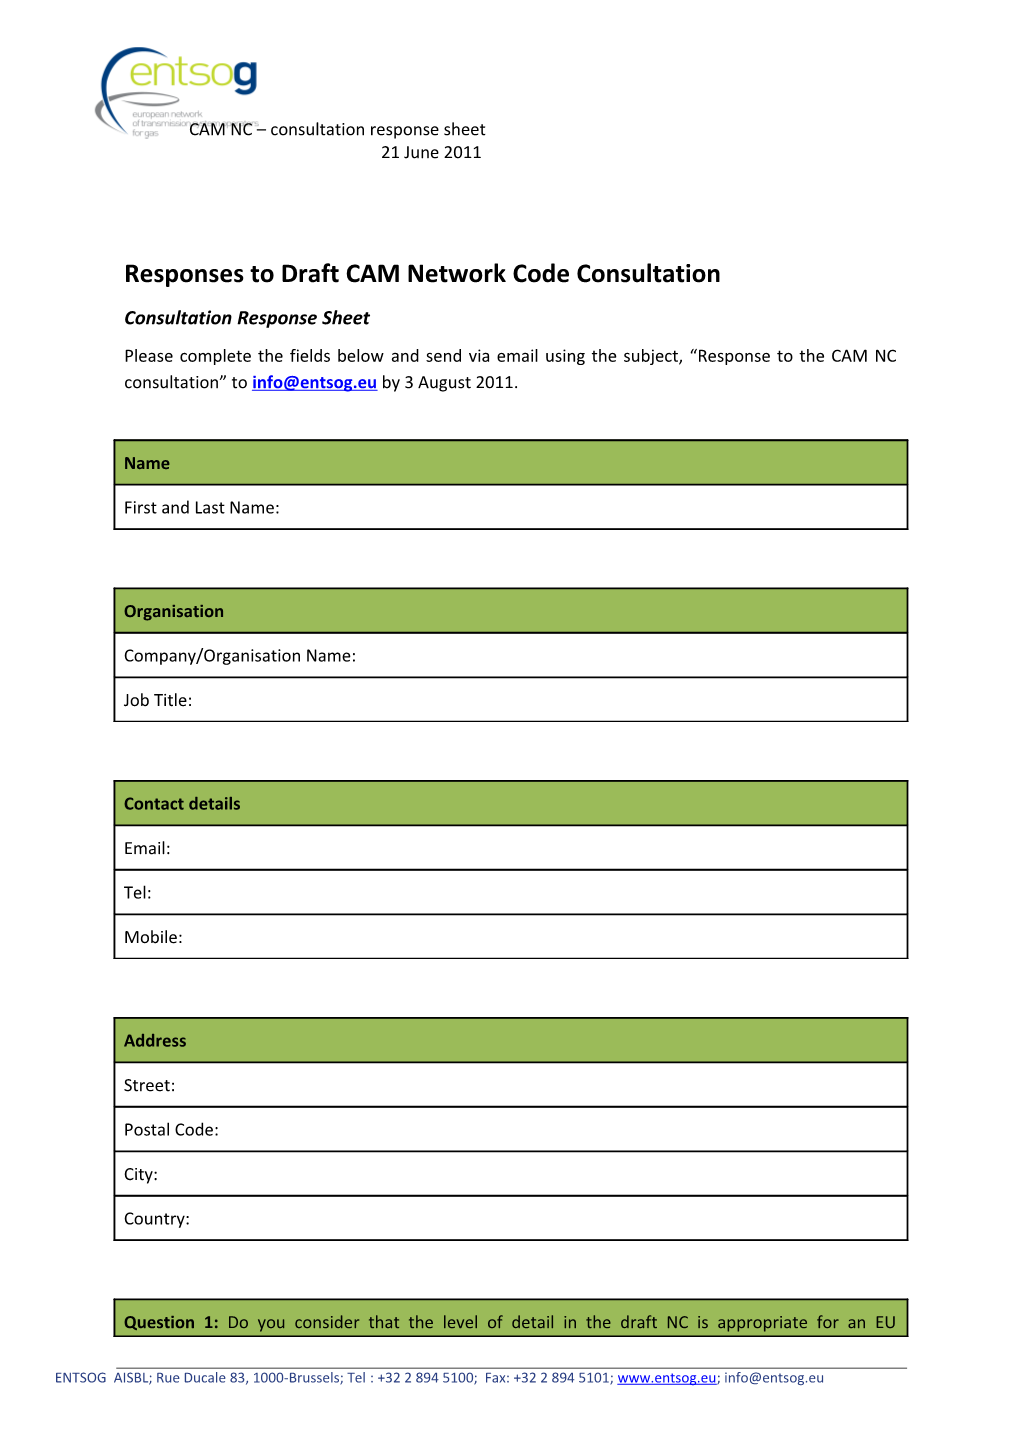 Responses to Draft CAM Network Code Consultation